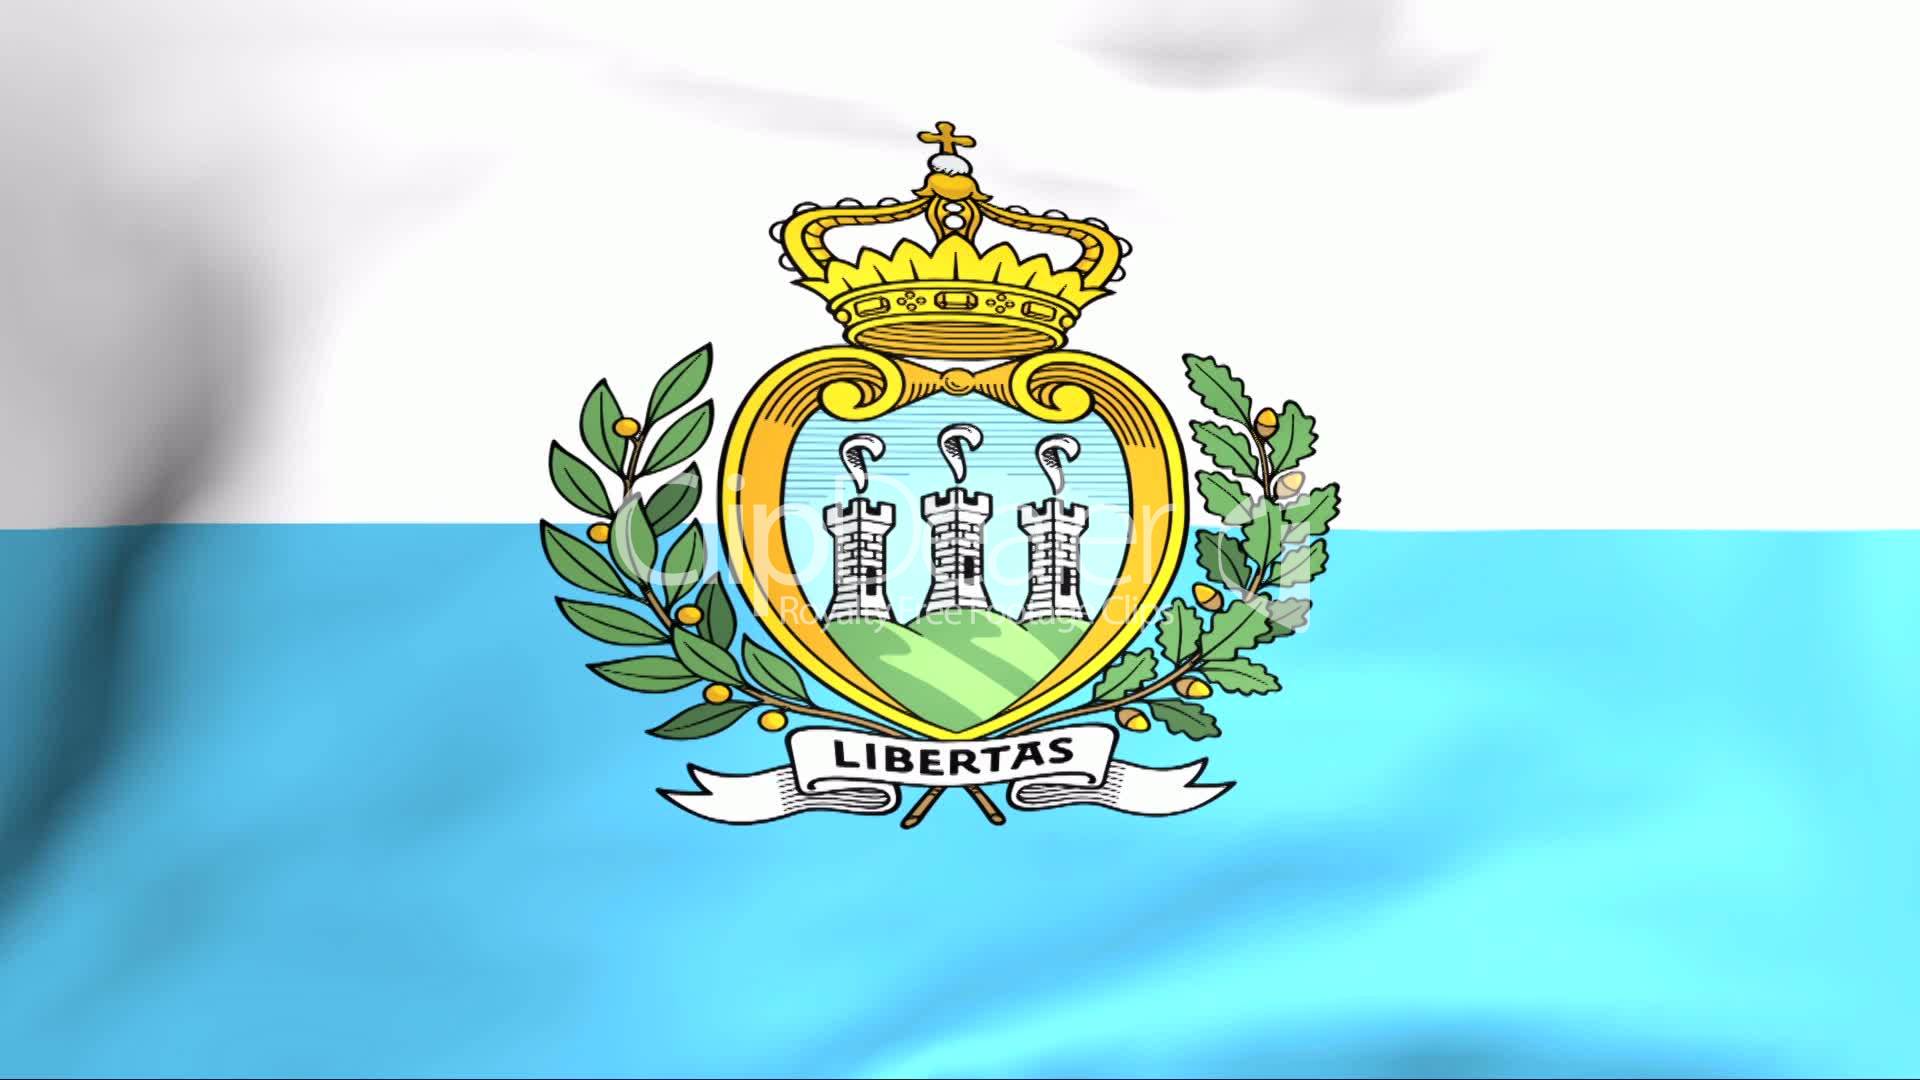 San Marino Flag Image Picture Of Flag Imageco.Org